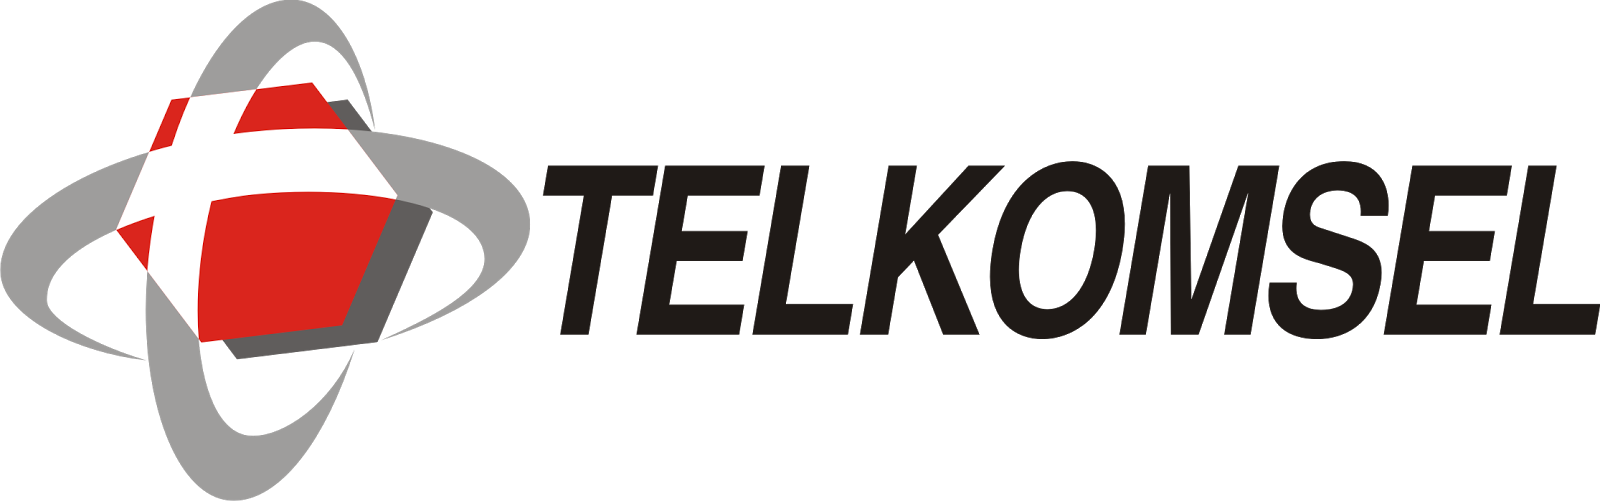 Logo Telkomsel - Free Vector CDR - Logo Lambang Indonesia